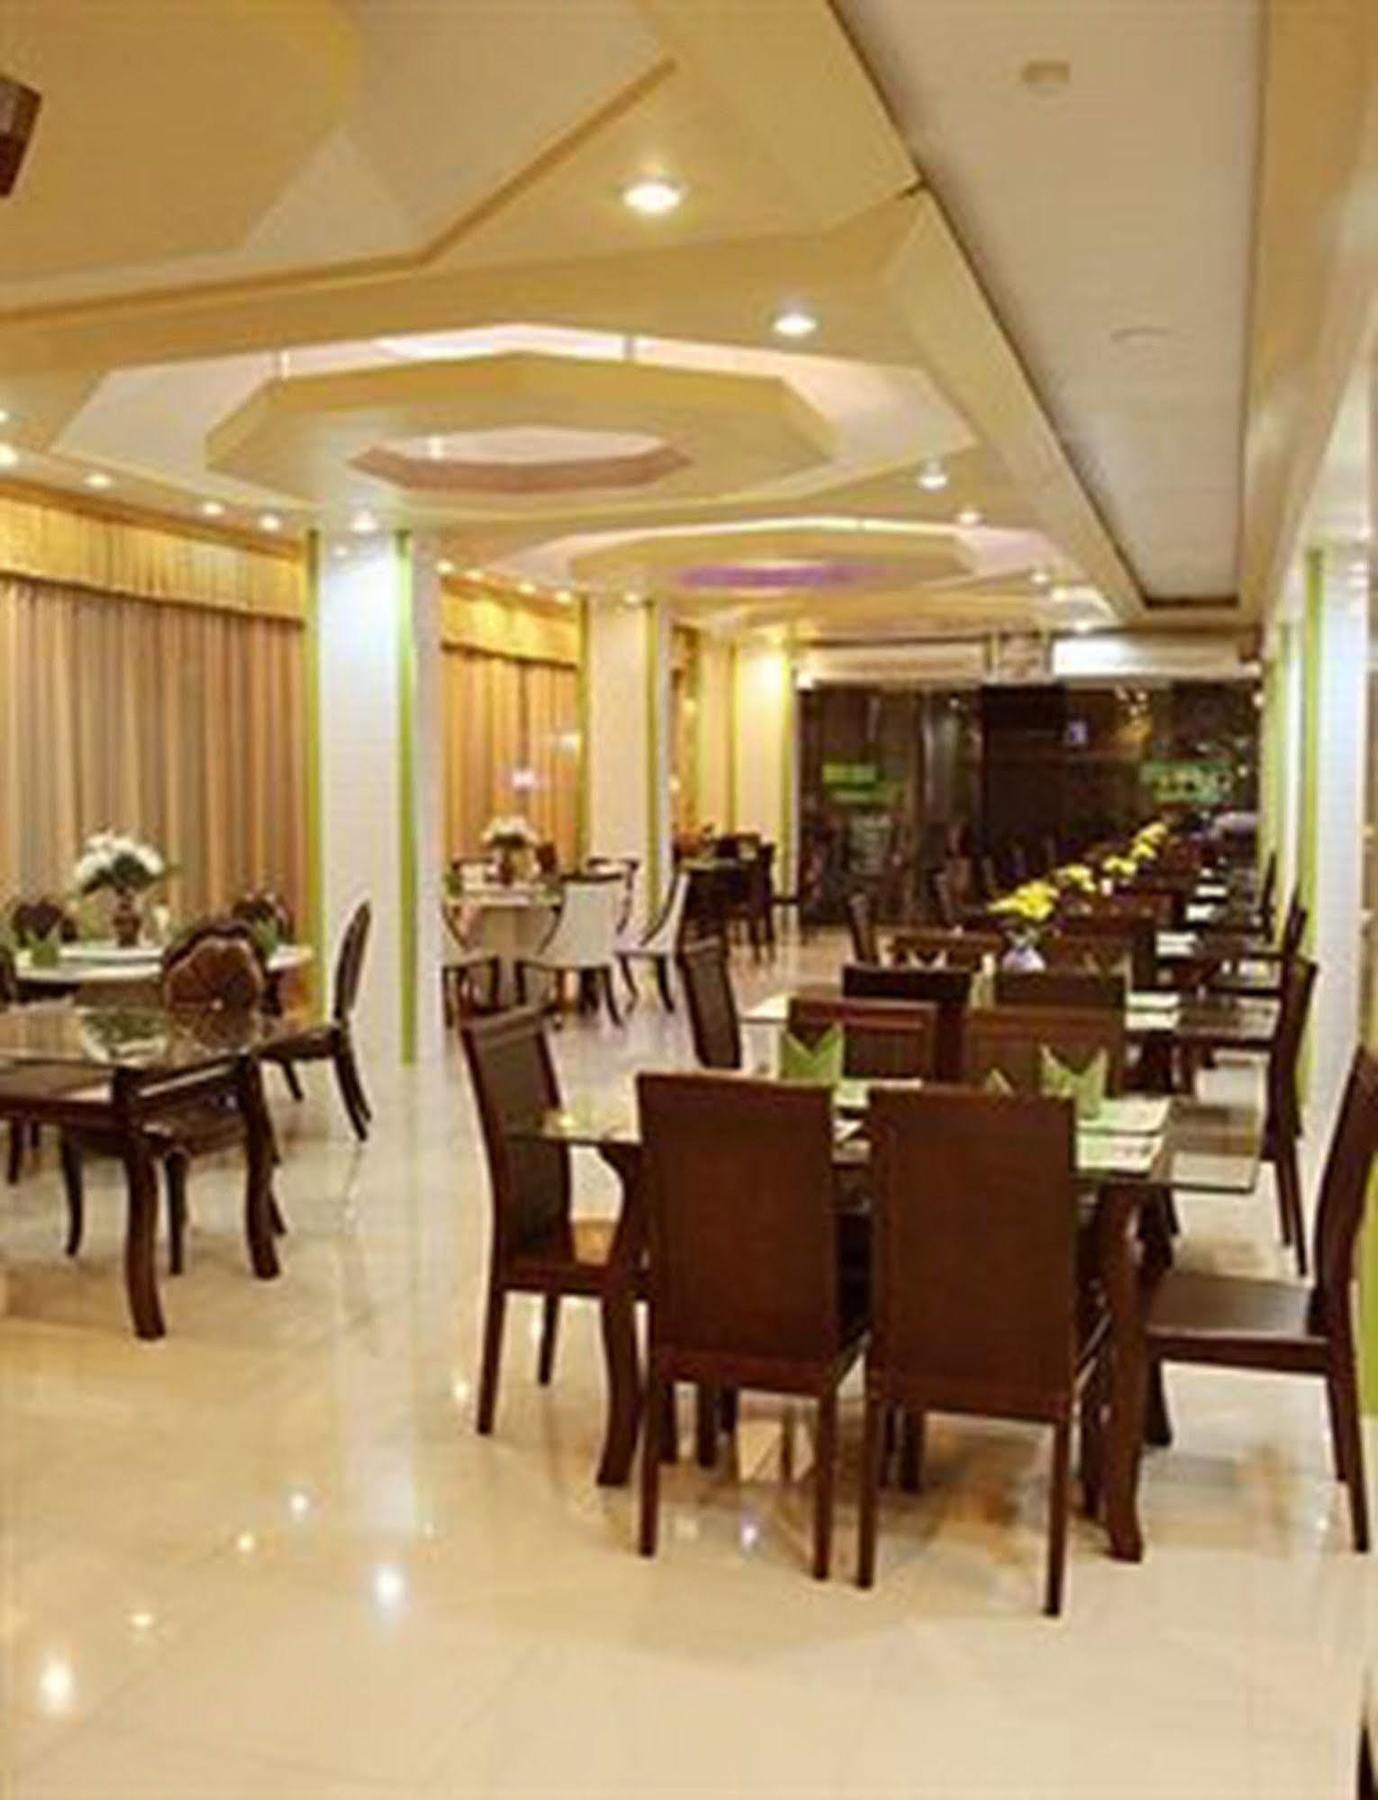 Visiting Card Hotel & Resort Bangkok Extérieur photo